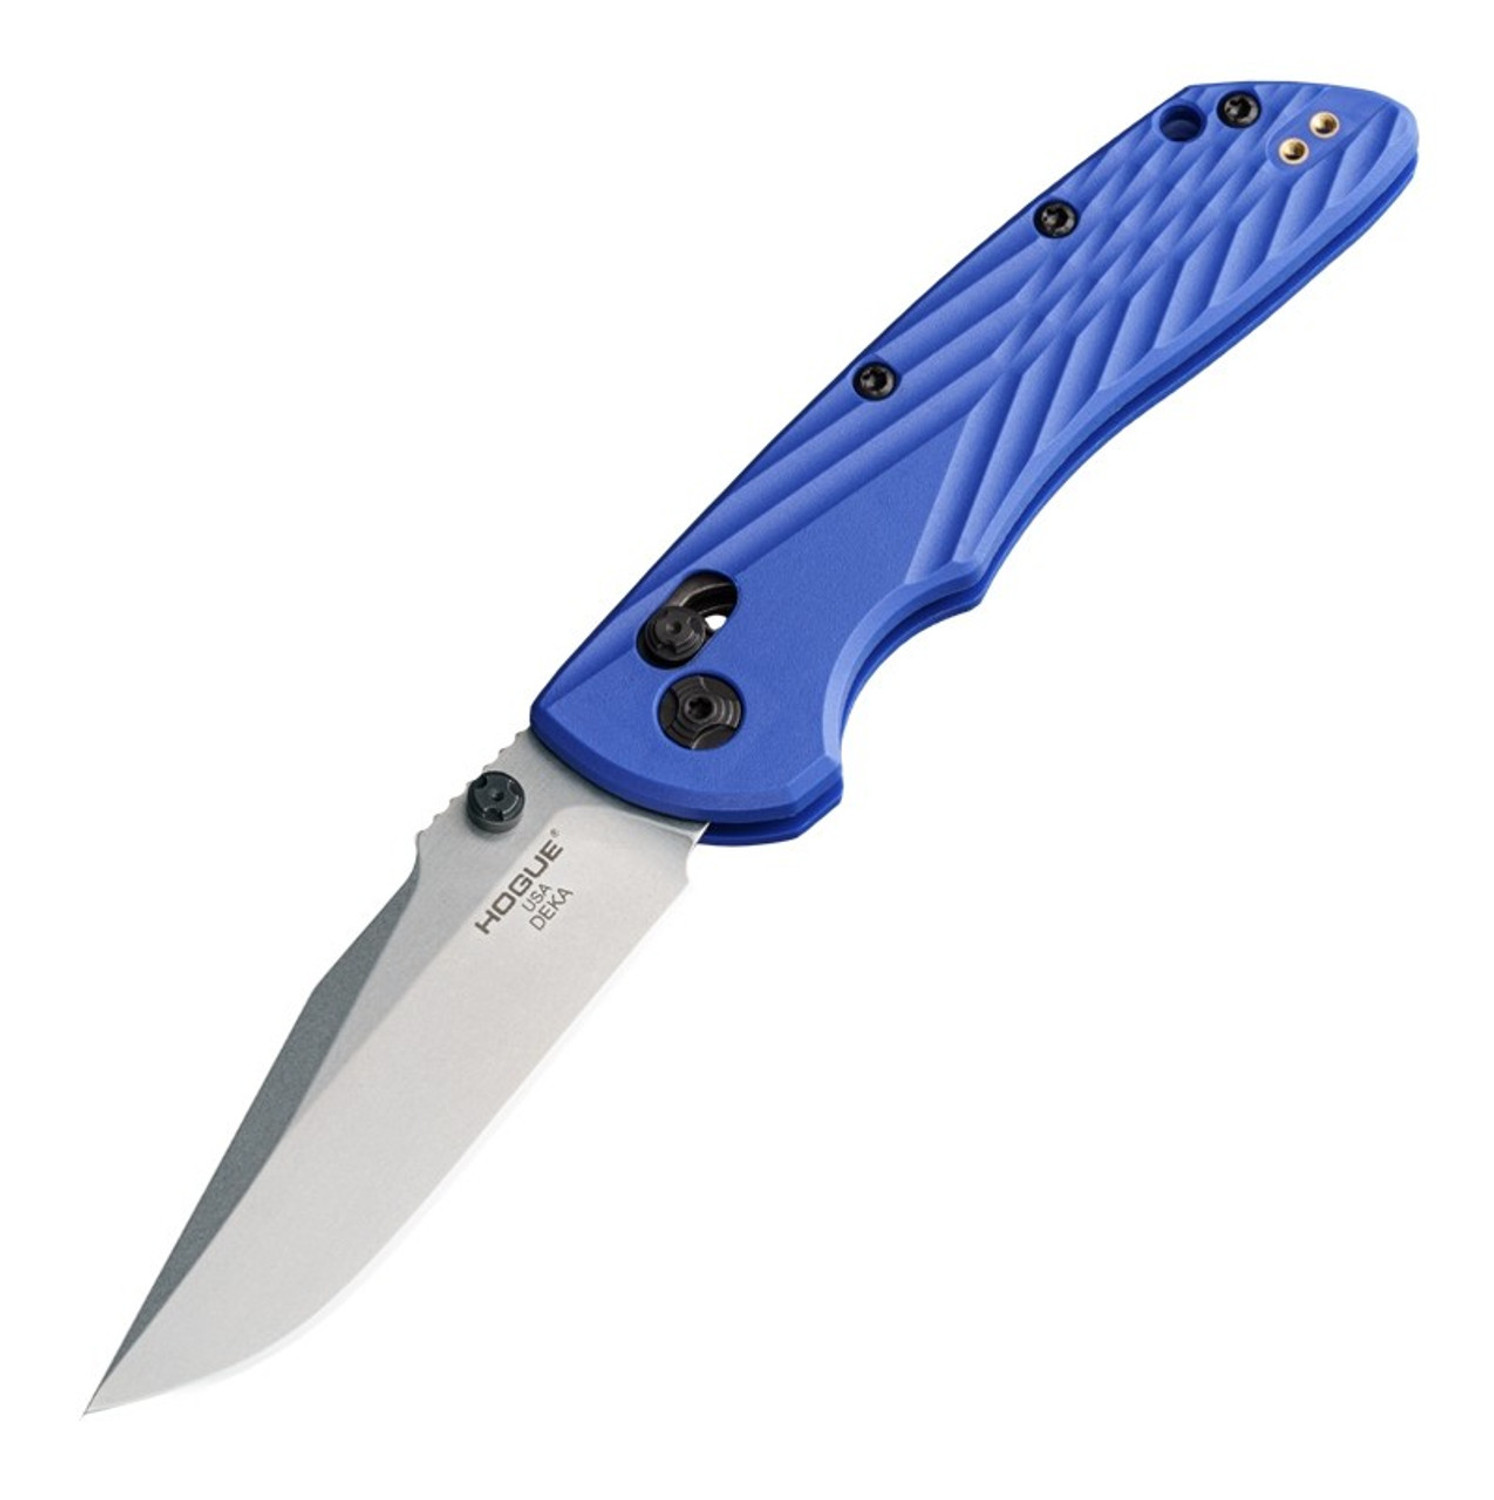 Hogue Deka Pocket Knife - Magnacut super steel, Blue polymer handle, Made in USA - $89.97 w/ free shipping